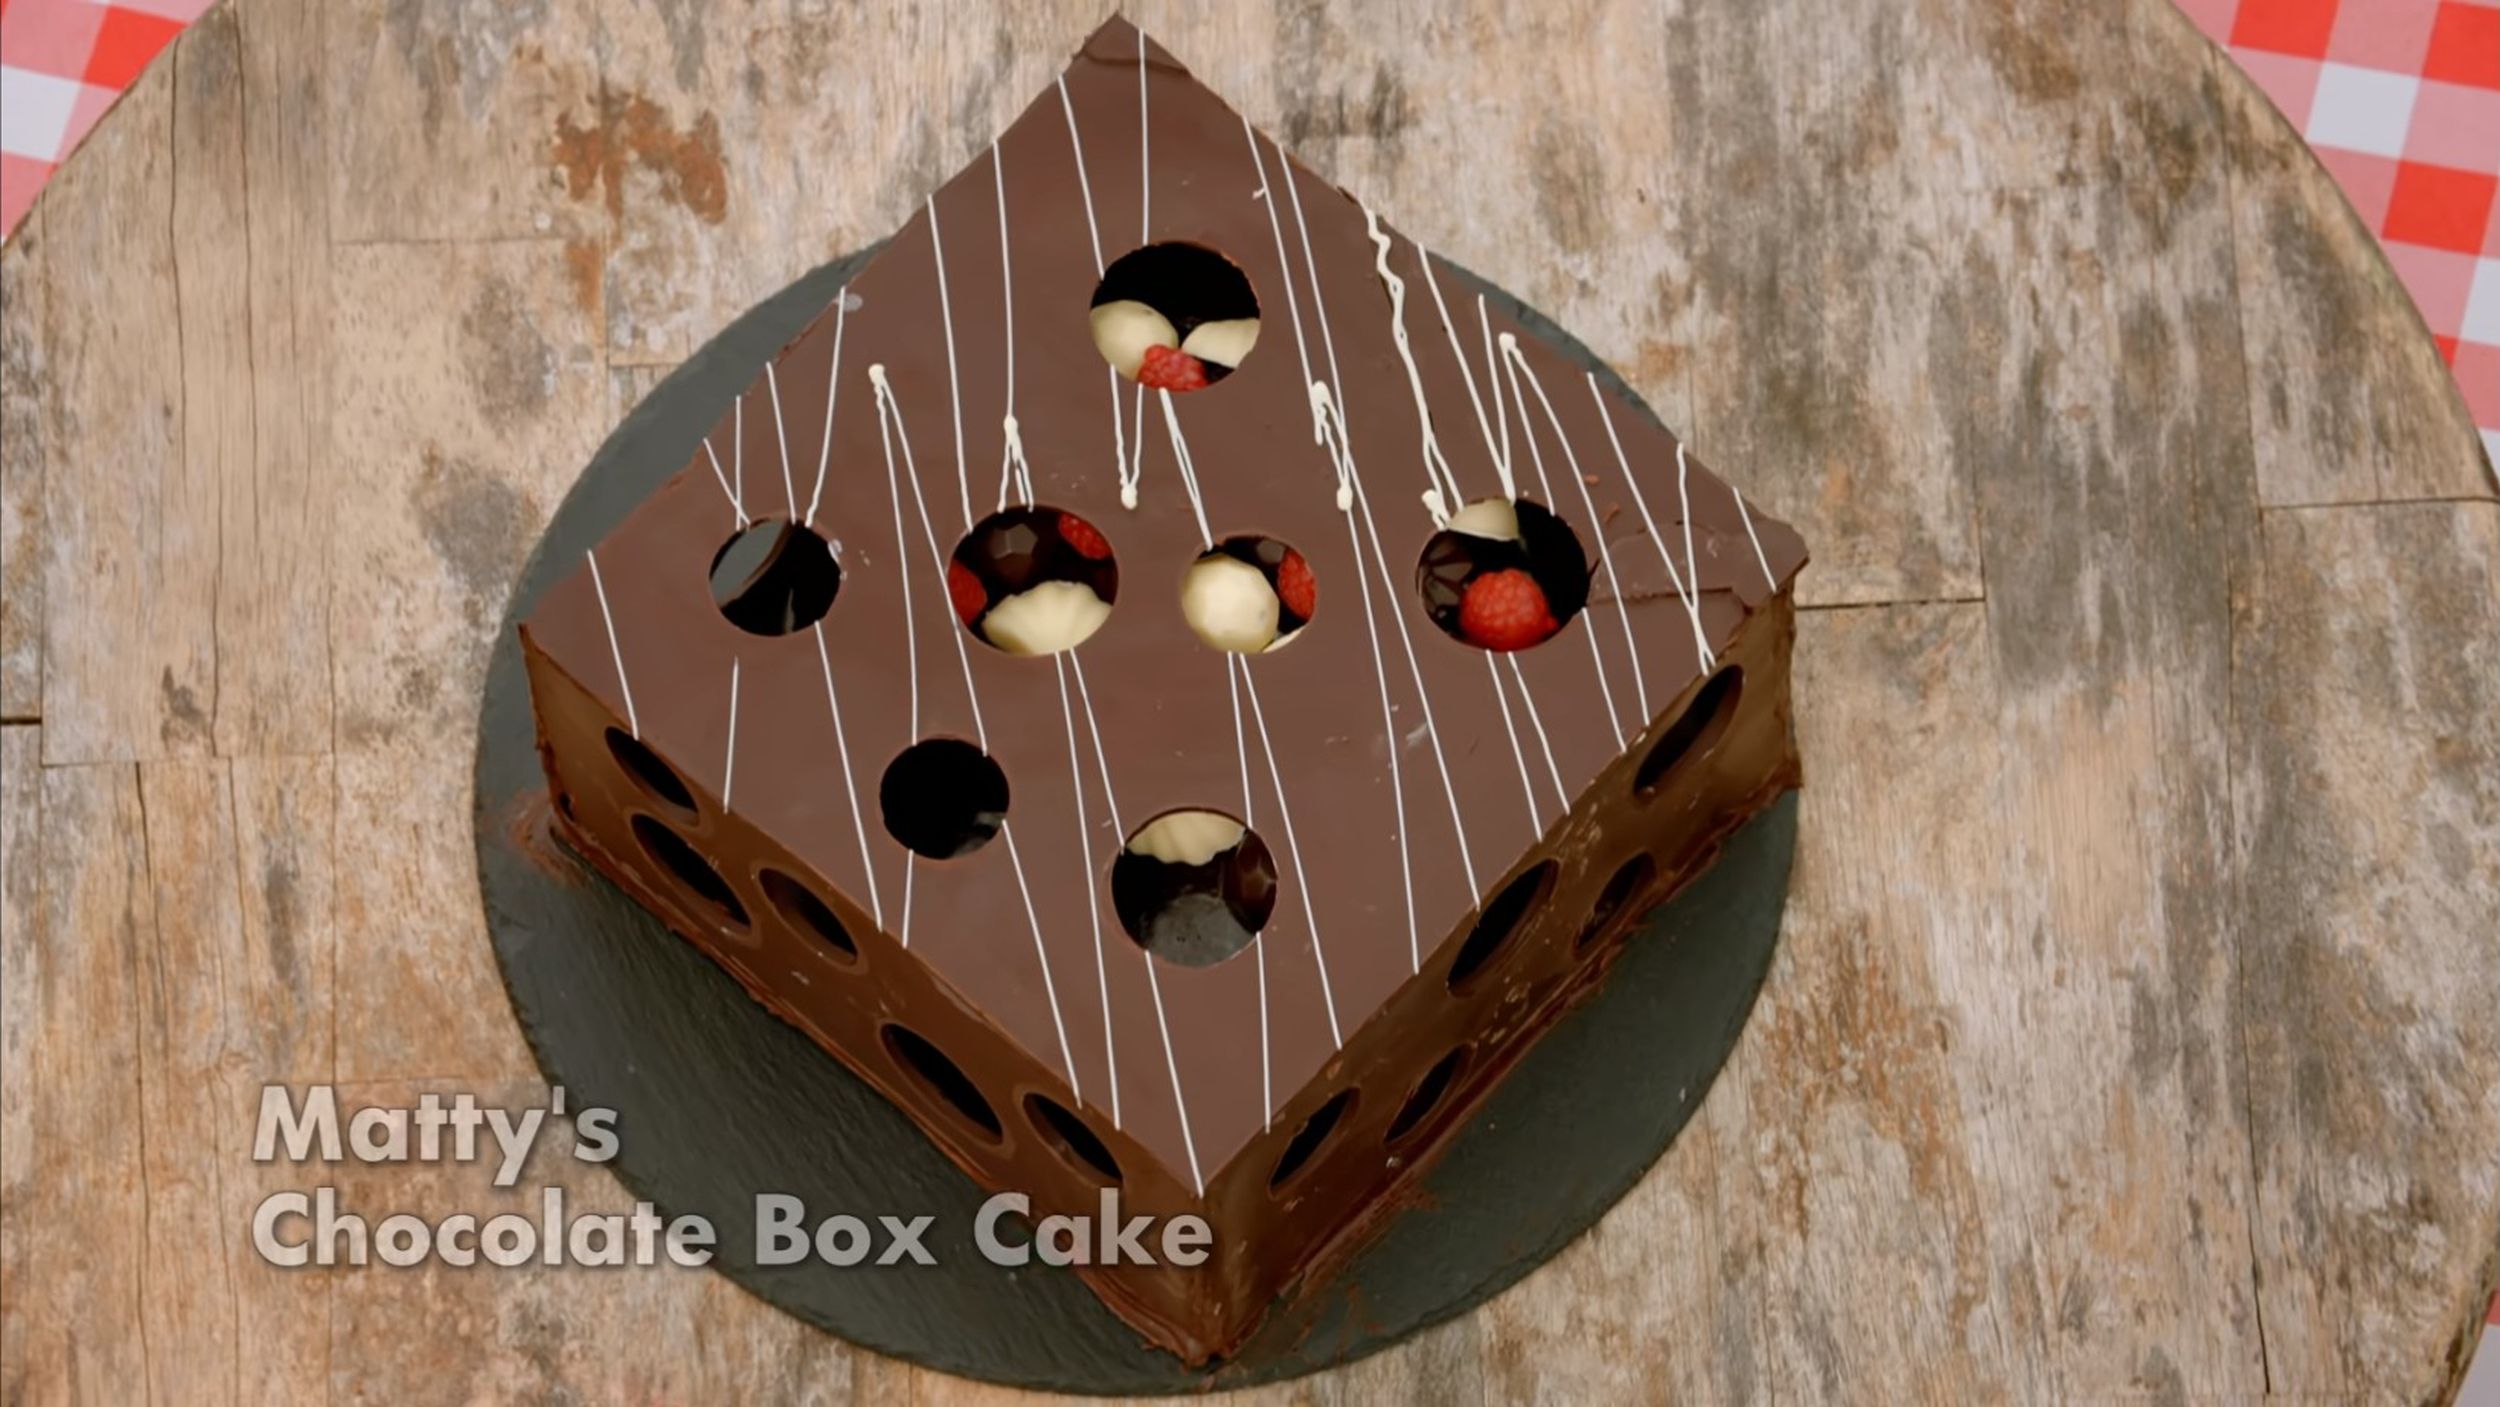 Matty's Chocolate Box Cake Showstopper from 'The Great British Baking Show' Season 14's Chocolate Week